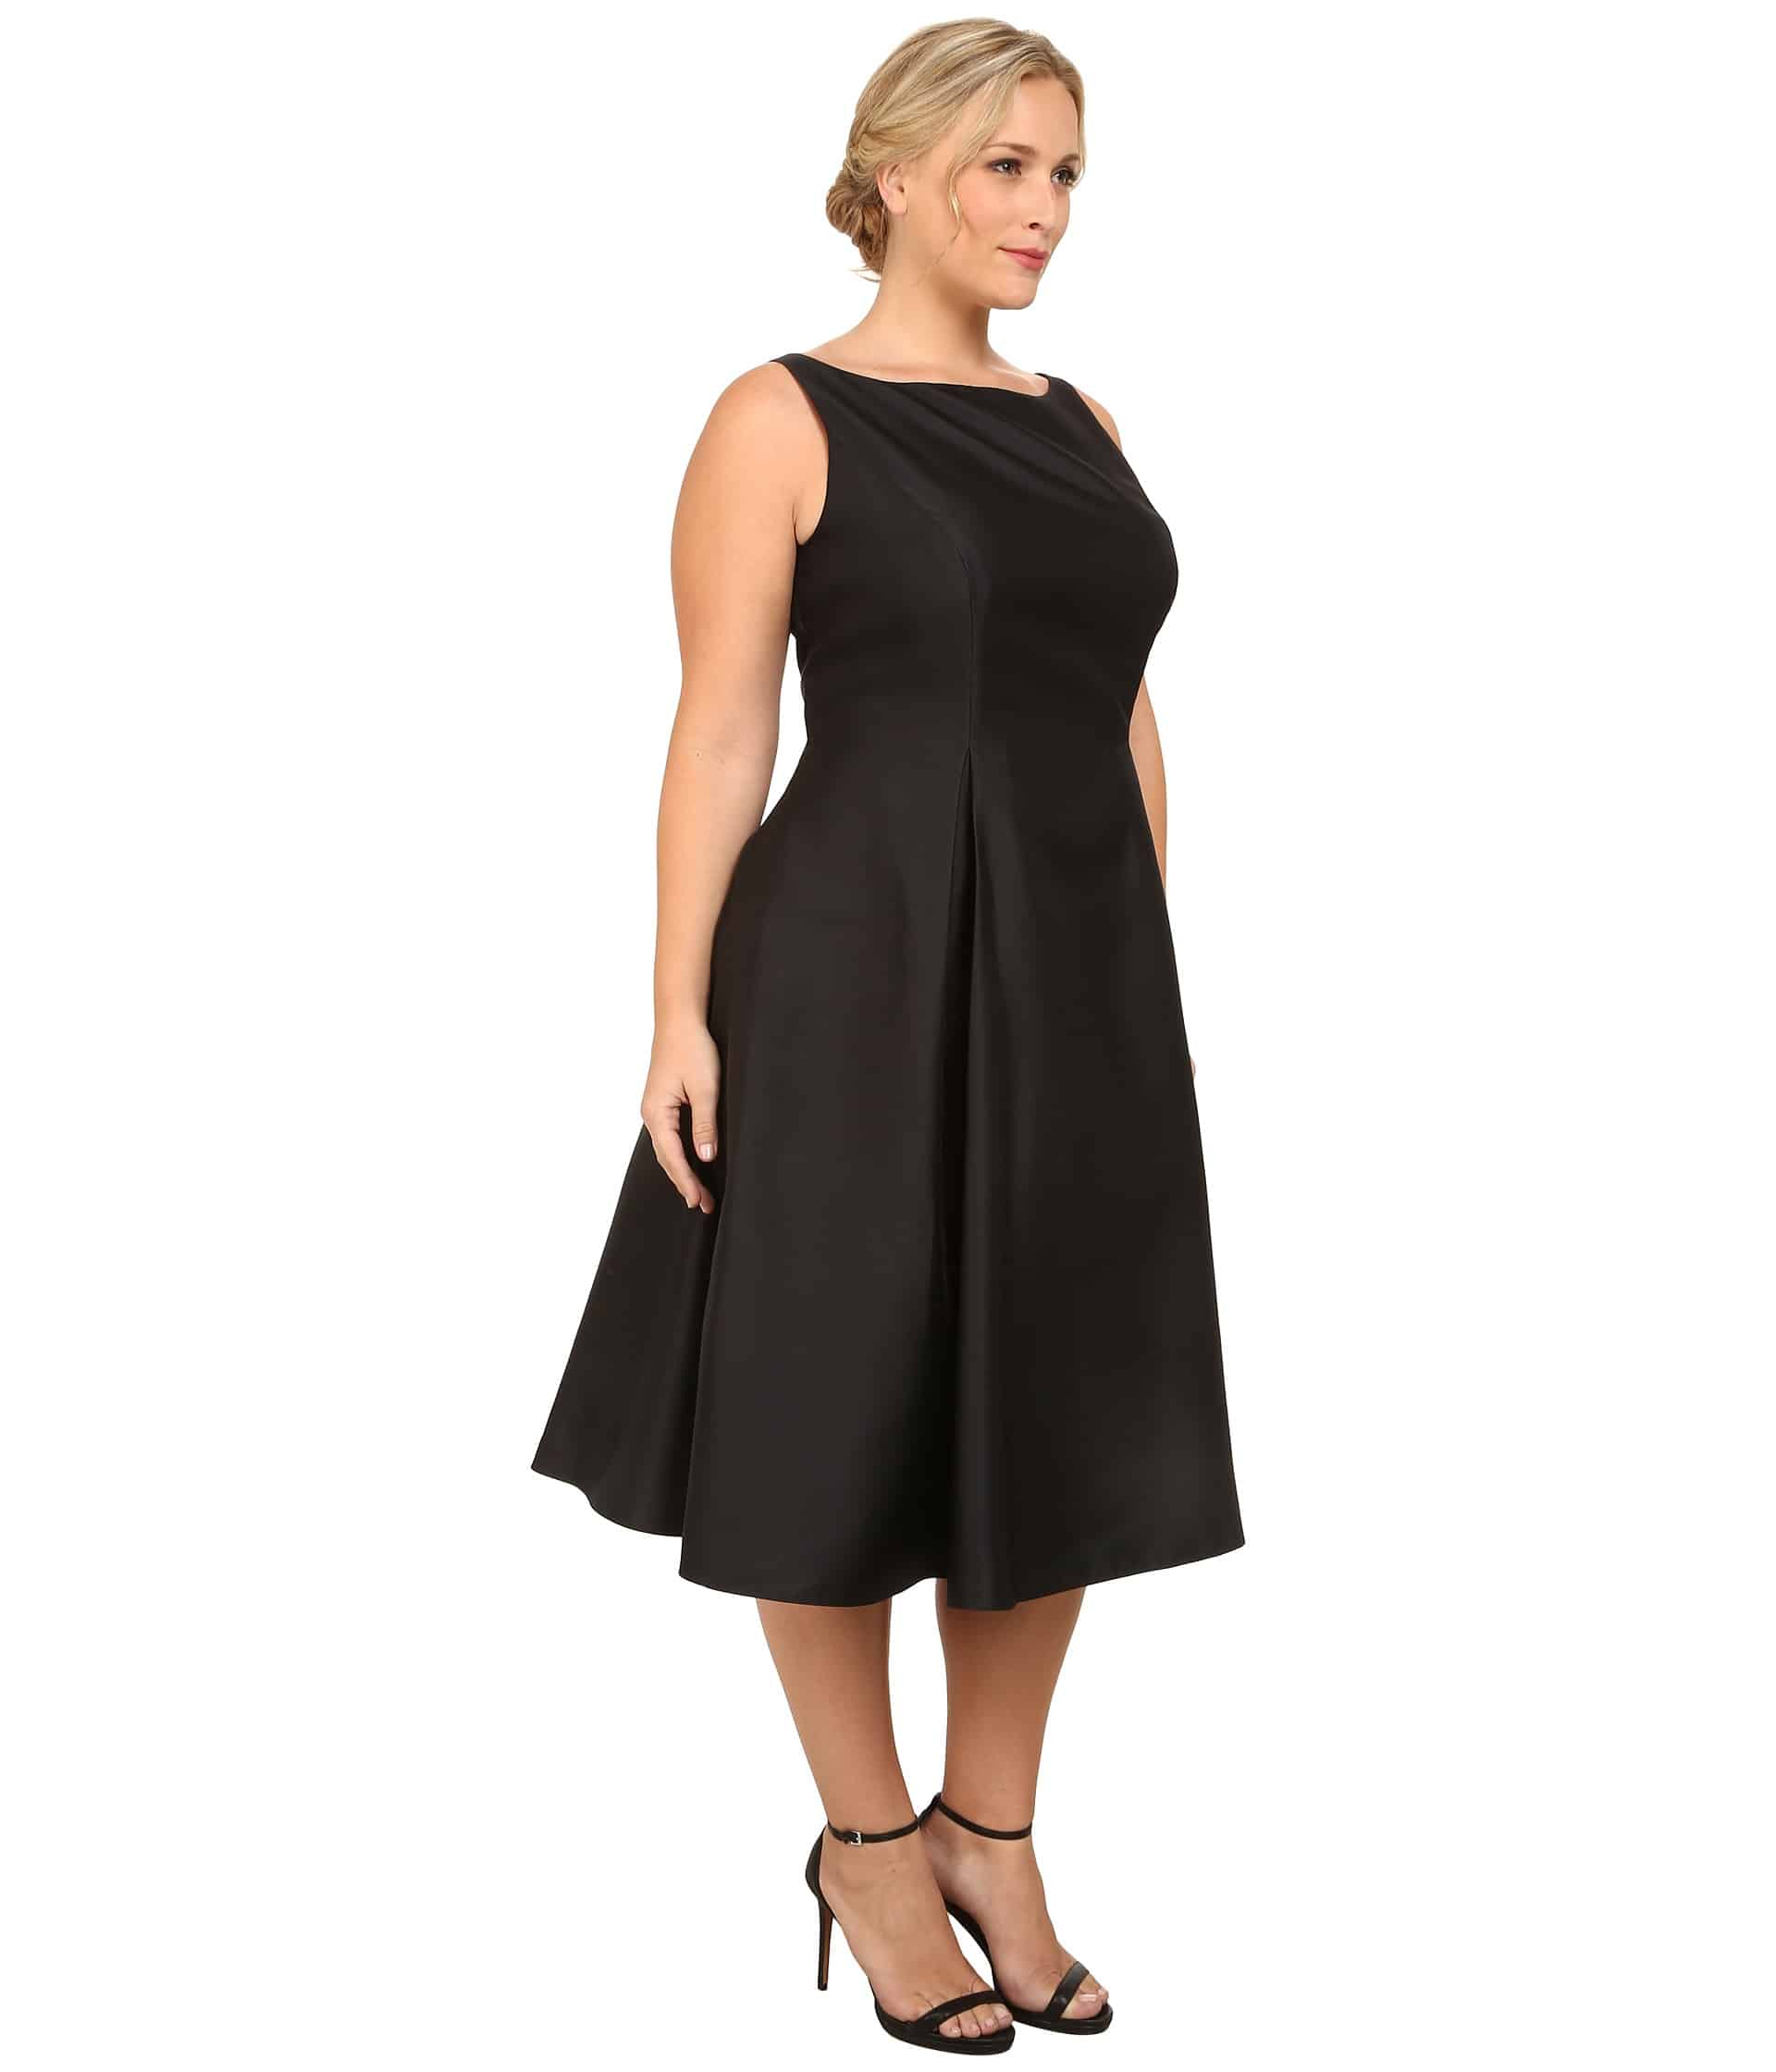 Adrianna Papell Satin Plus Size Sleeveless Tea Length Dress in Black